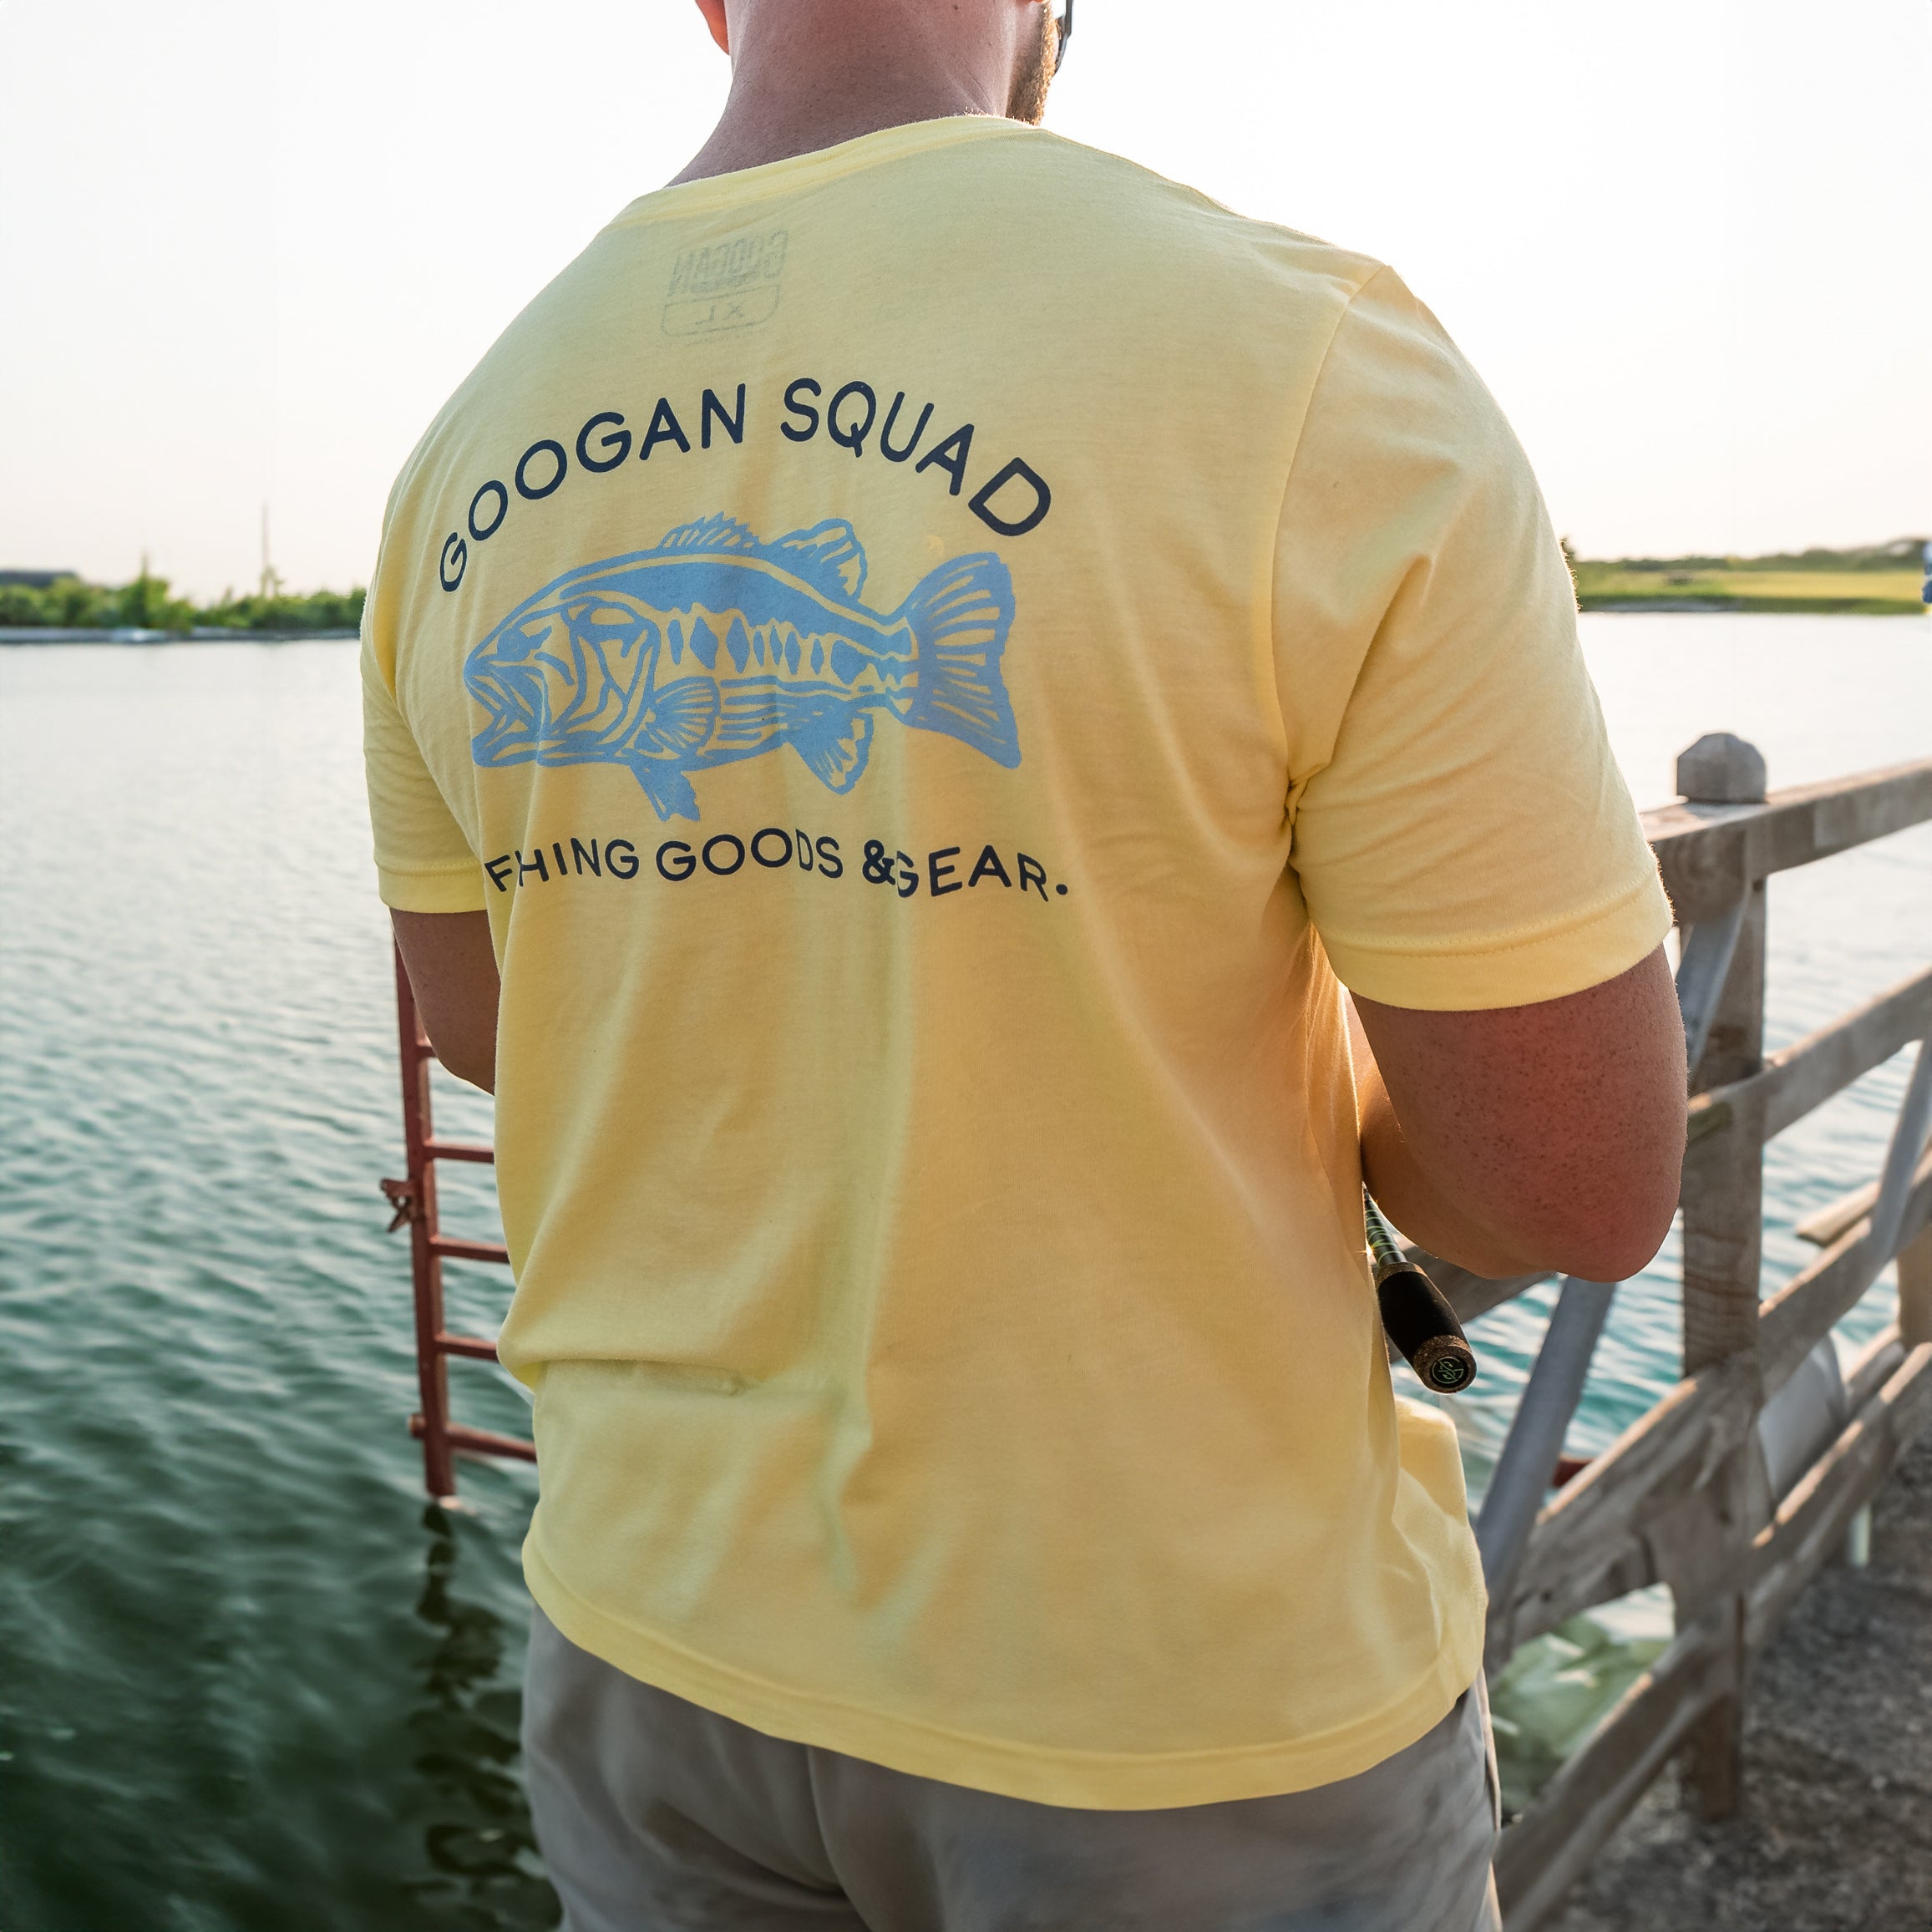 New Shirt Googan Squad Fishing Baits Logo Men's T-Shirt USA Size S to 5XL